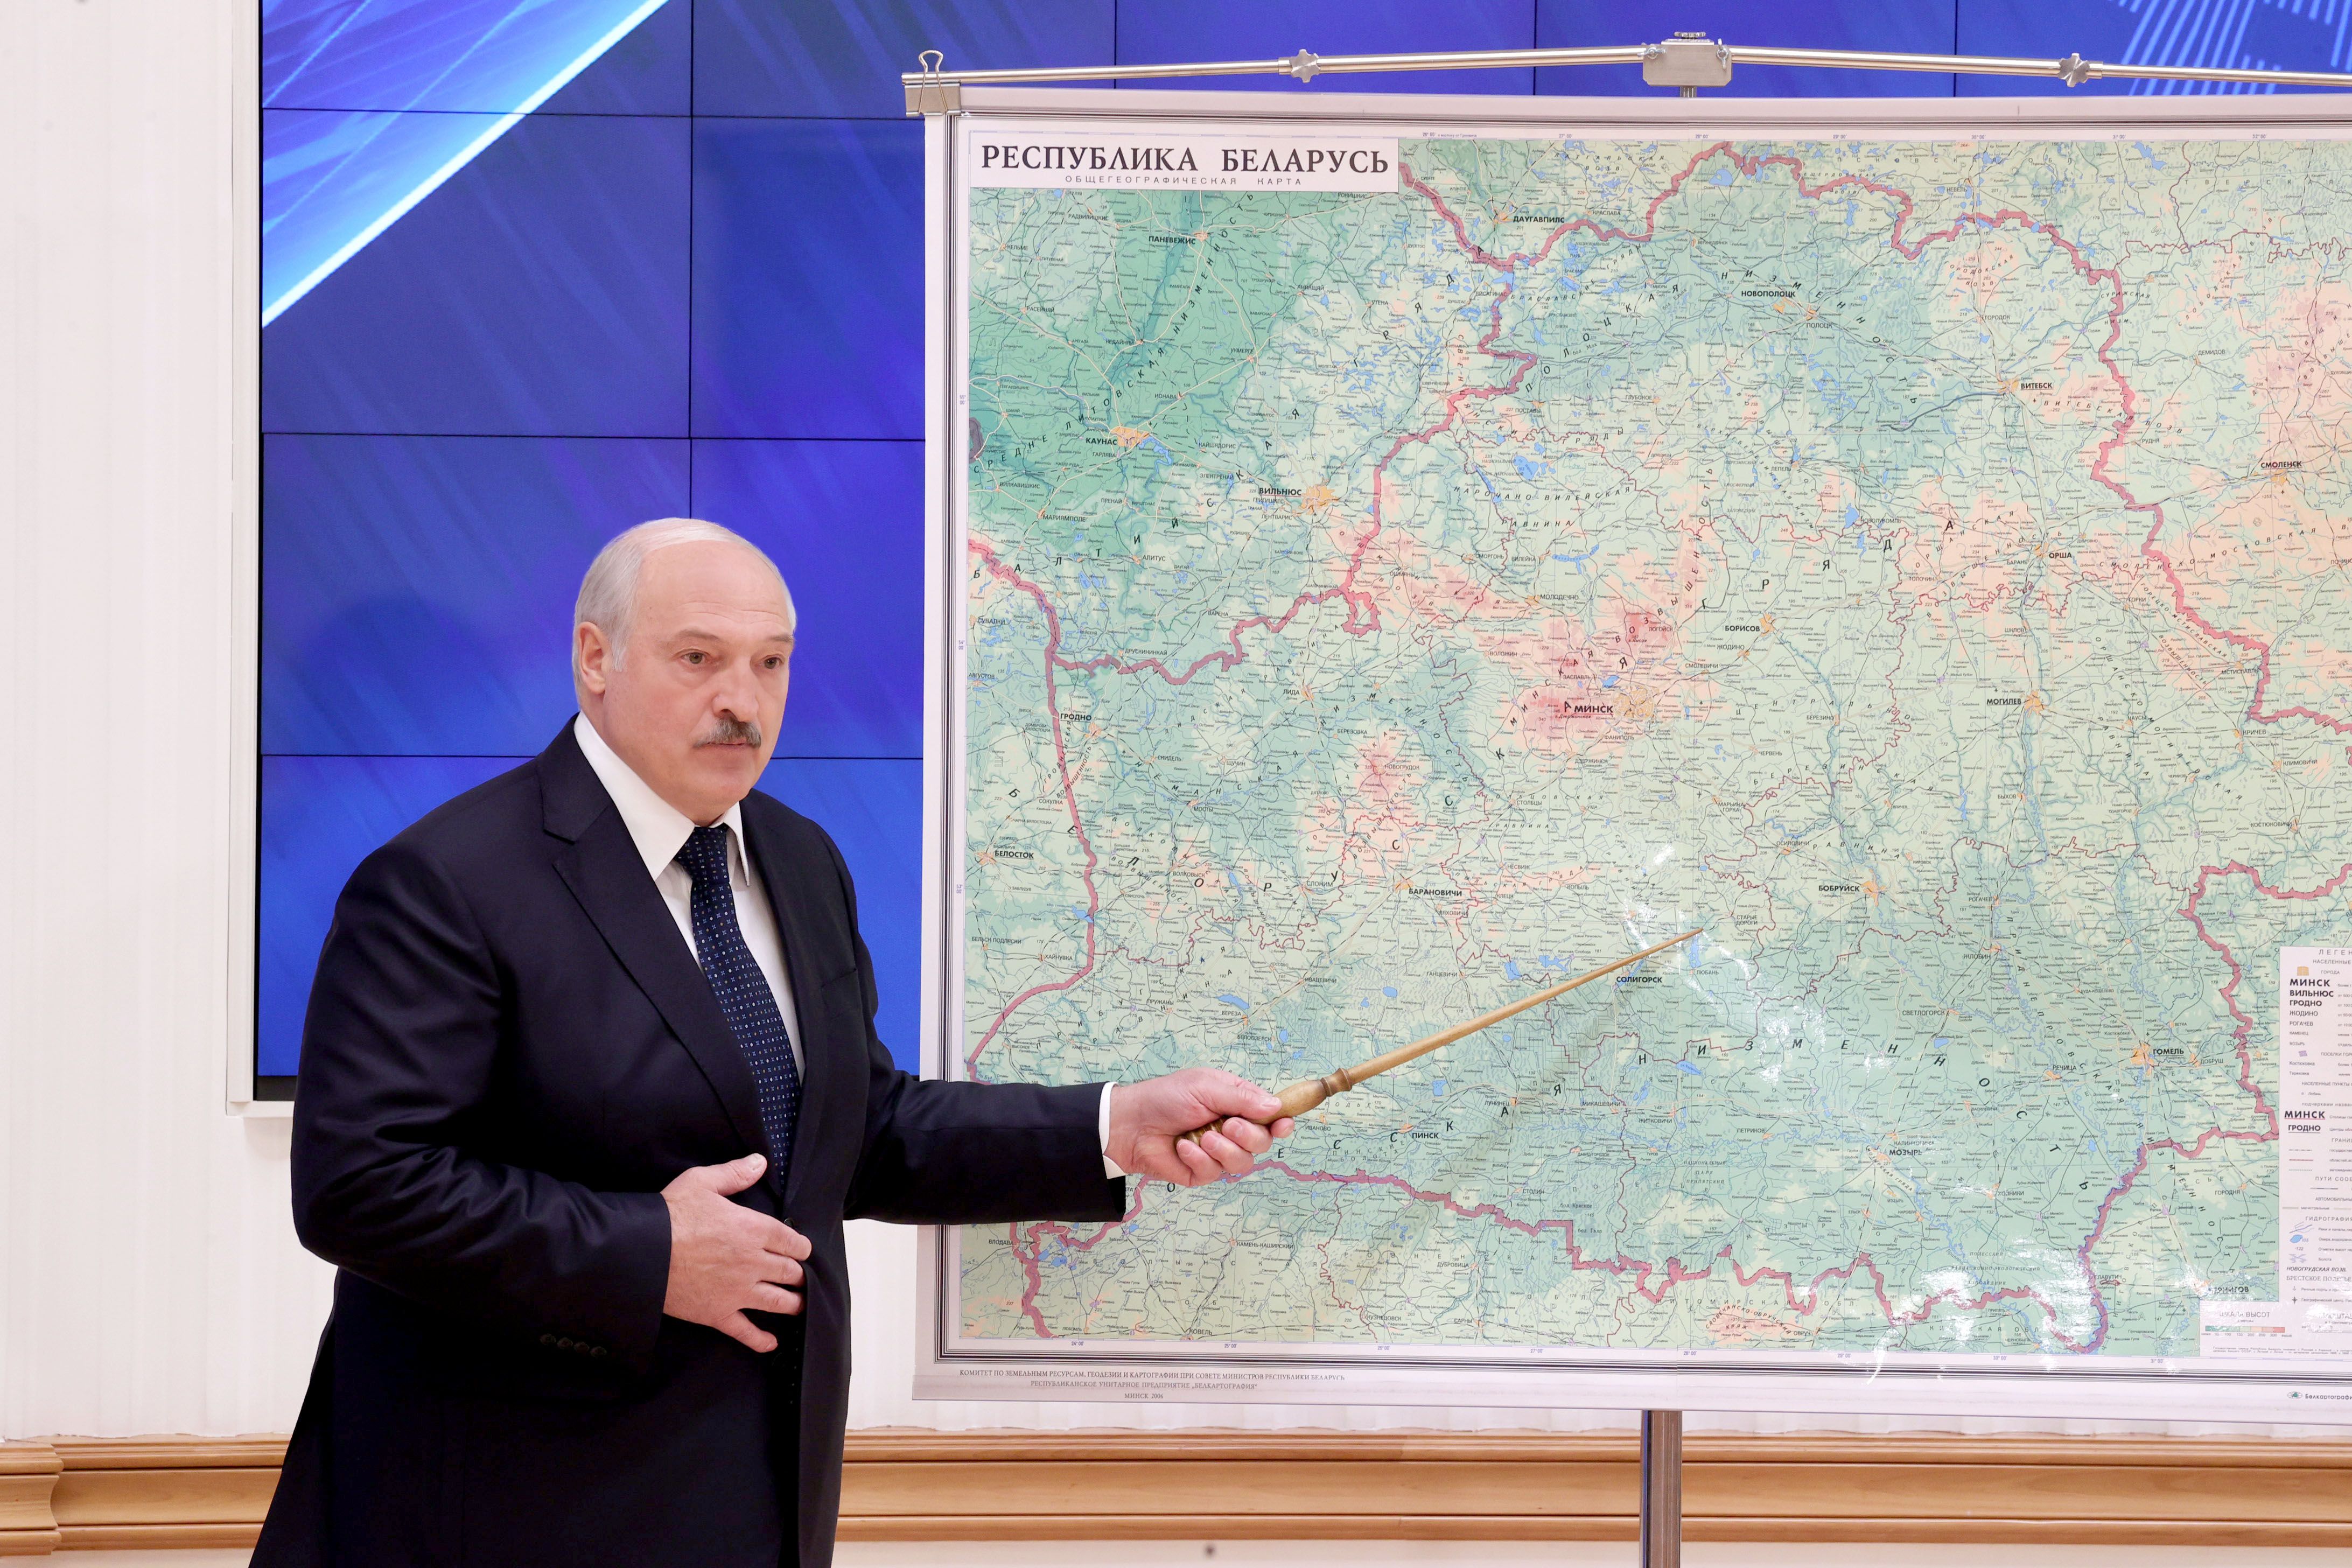 Сейчас покажу откуда на беларусь готовилось нападение. Лукашенко 2022. Лукашенко нападение на Беларусь. Лукашенко фото 2022.